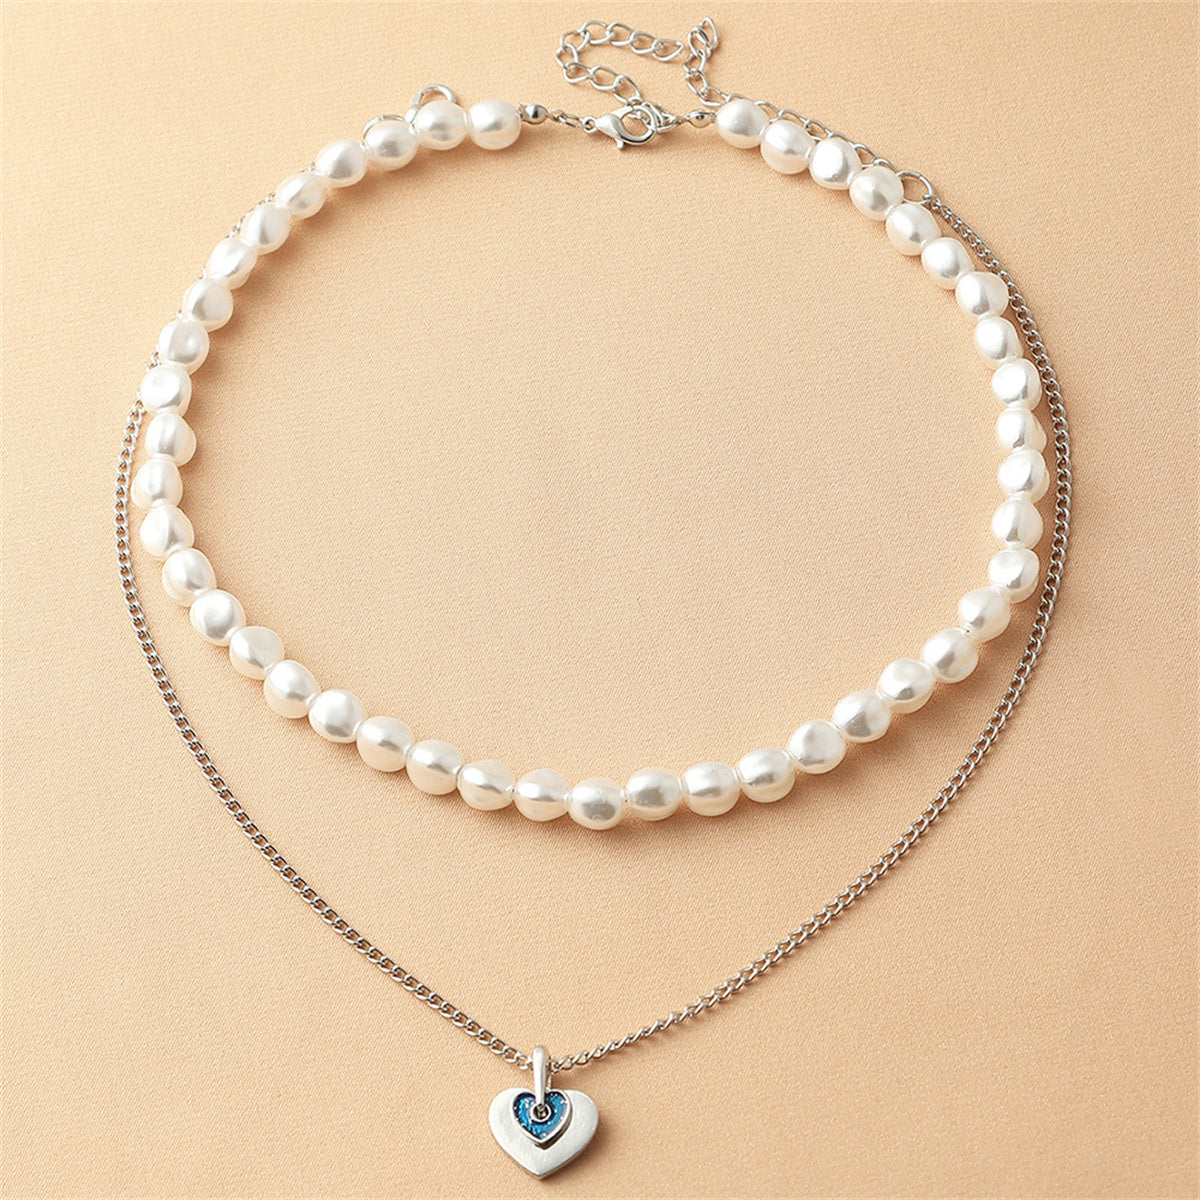 Blue Enamel & Pearl Silver-Plated Heart Pendant Necklace Set